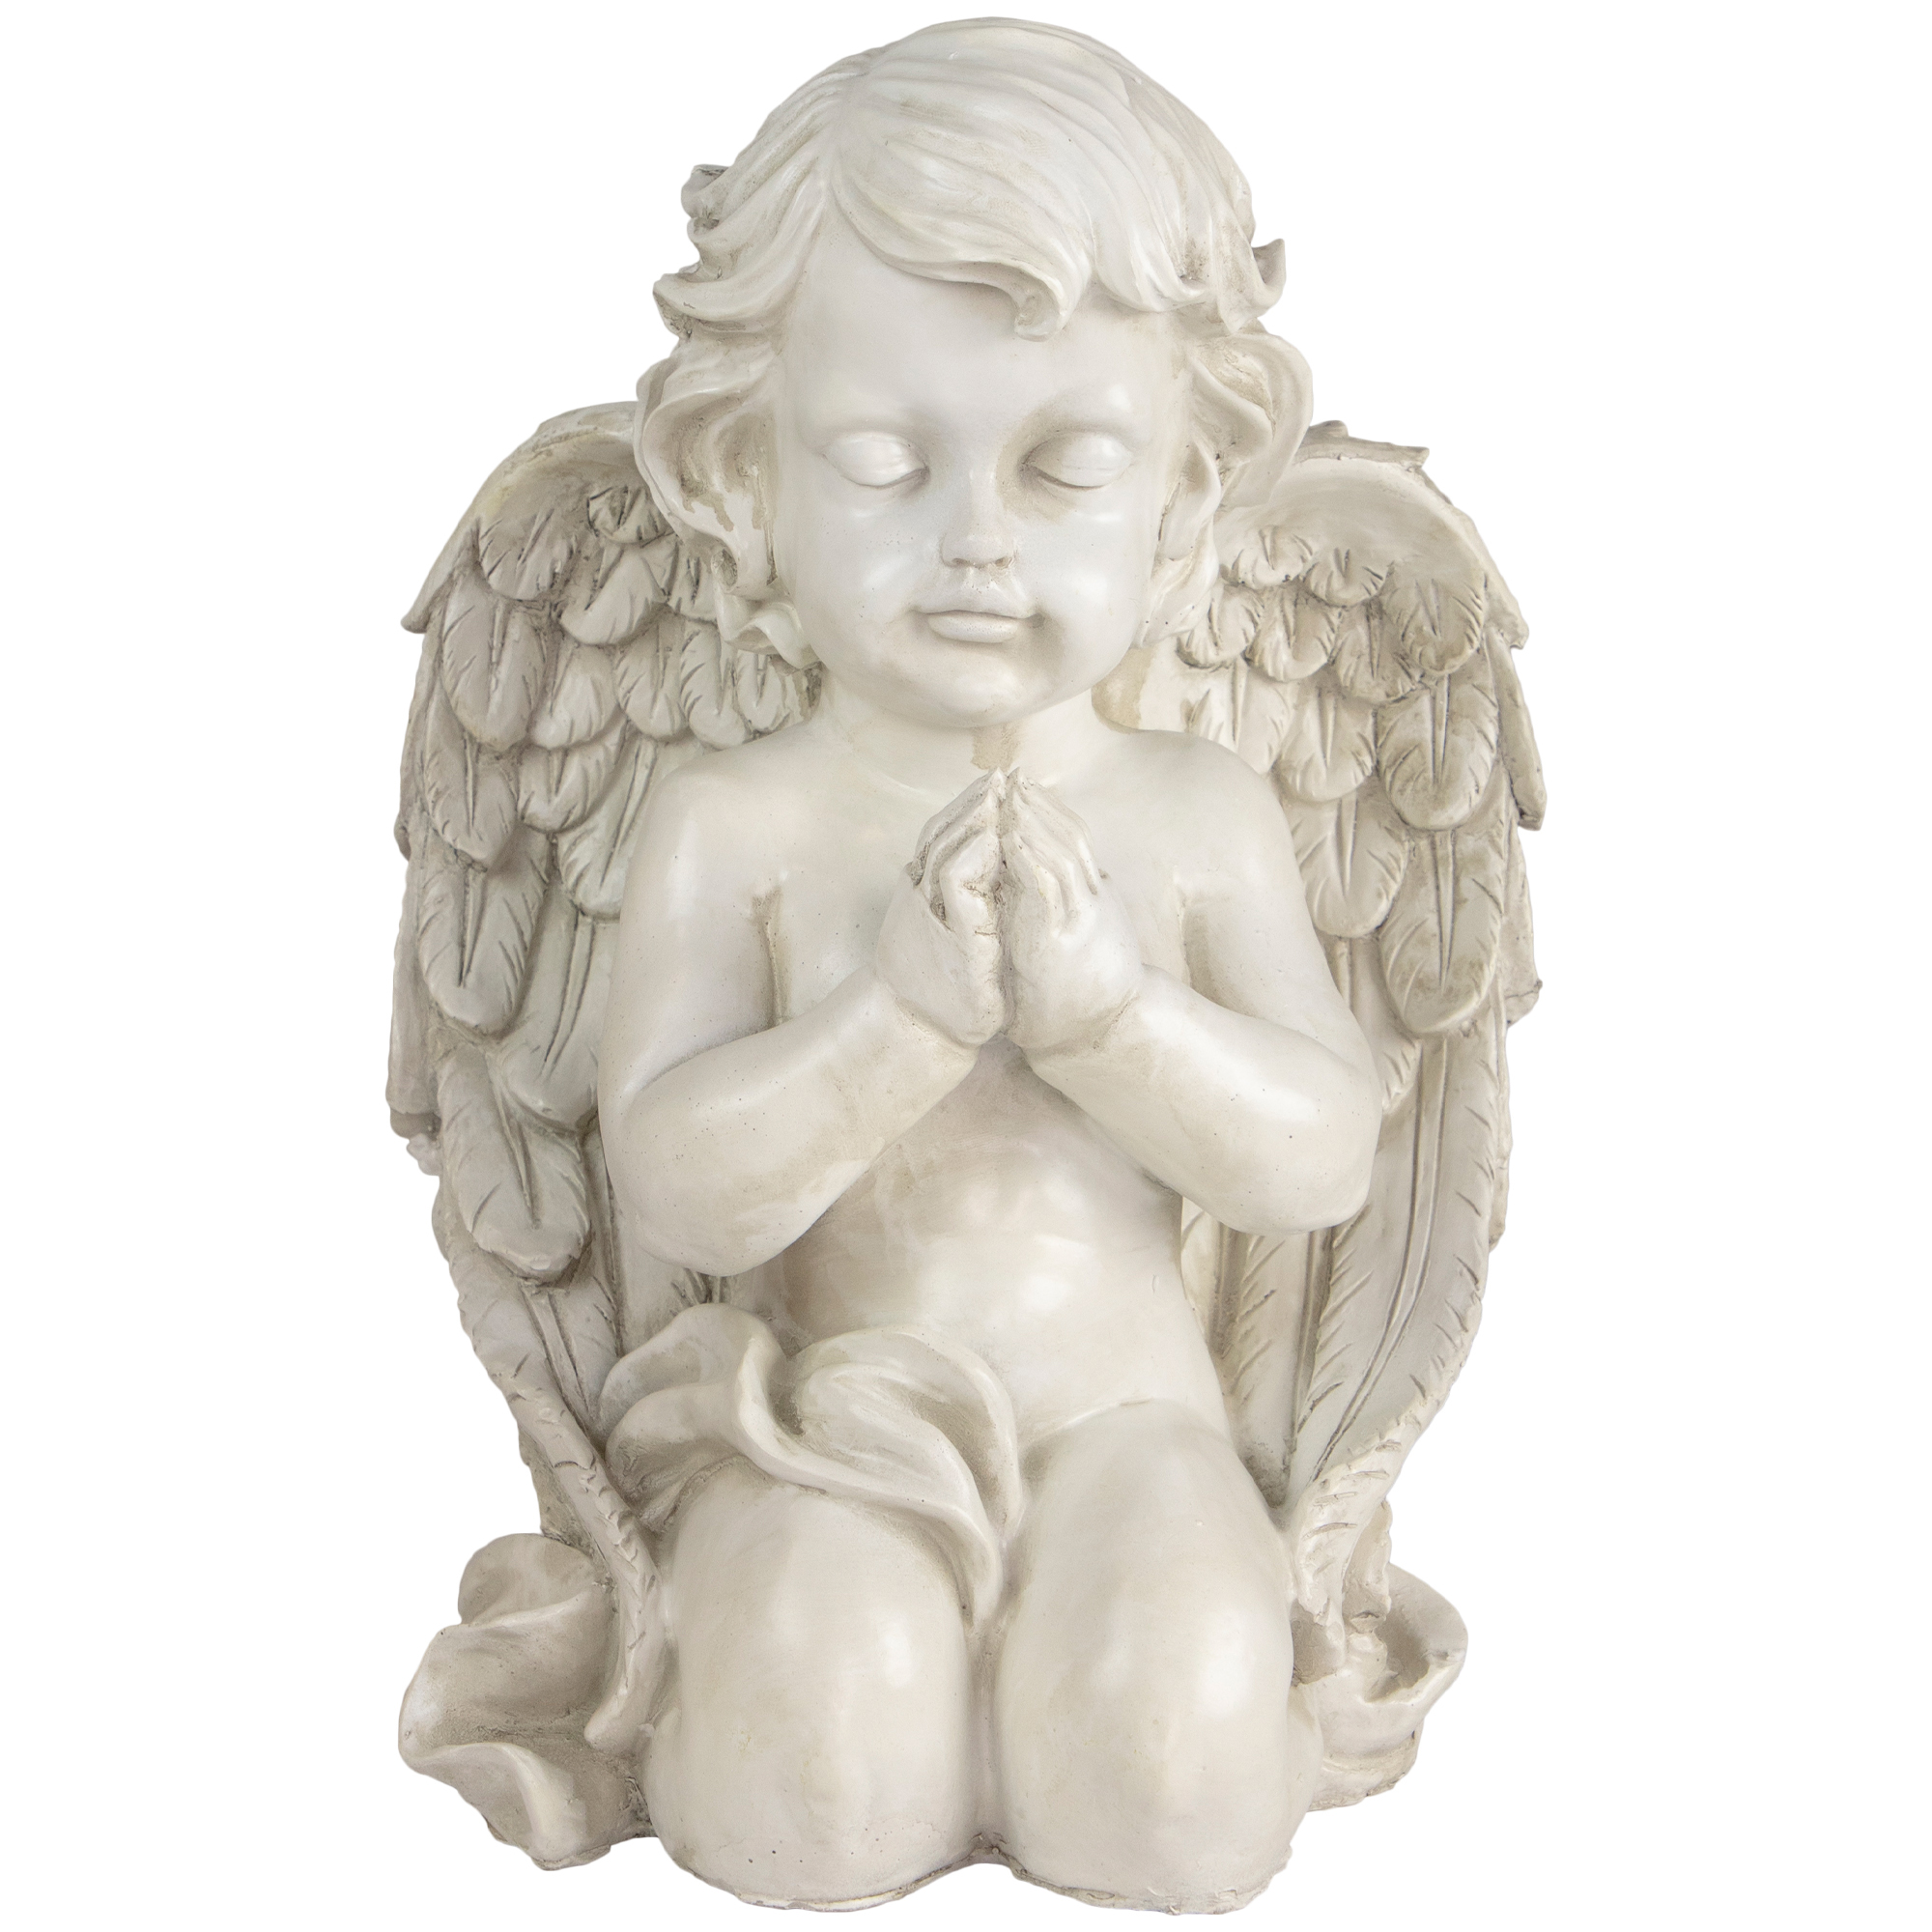 Northlight 13.5" Kneeling Praying Cherub Angel Religious Outdoor Patio Garden Statue - Gray - image 1 of 5